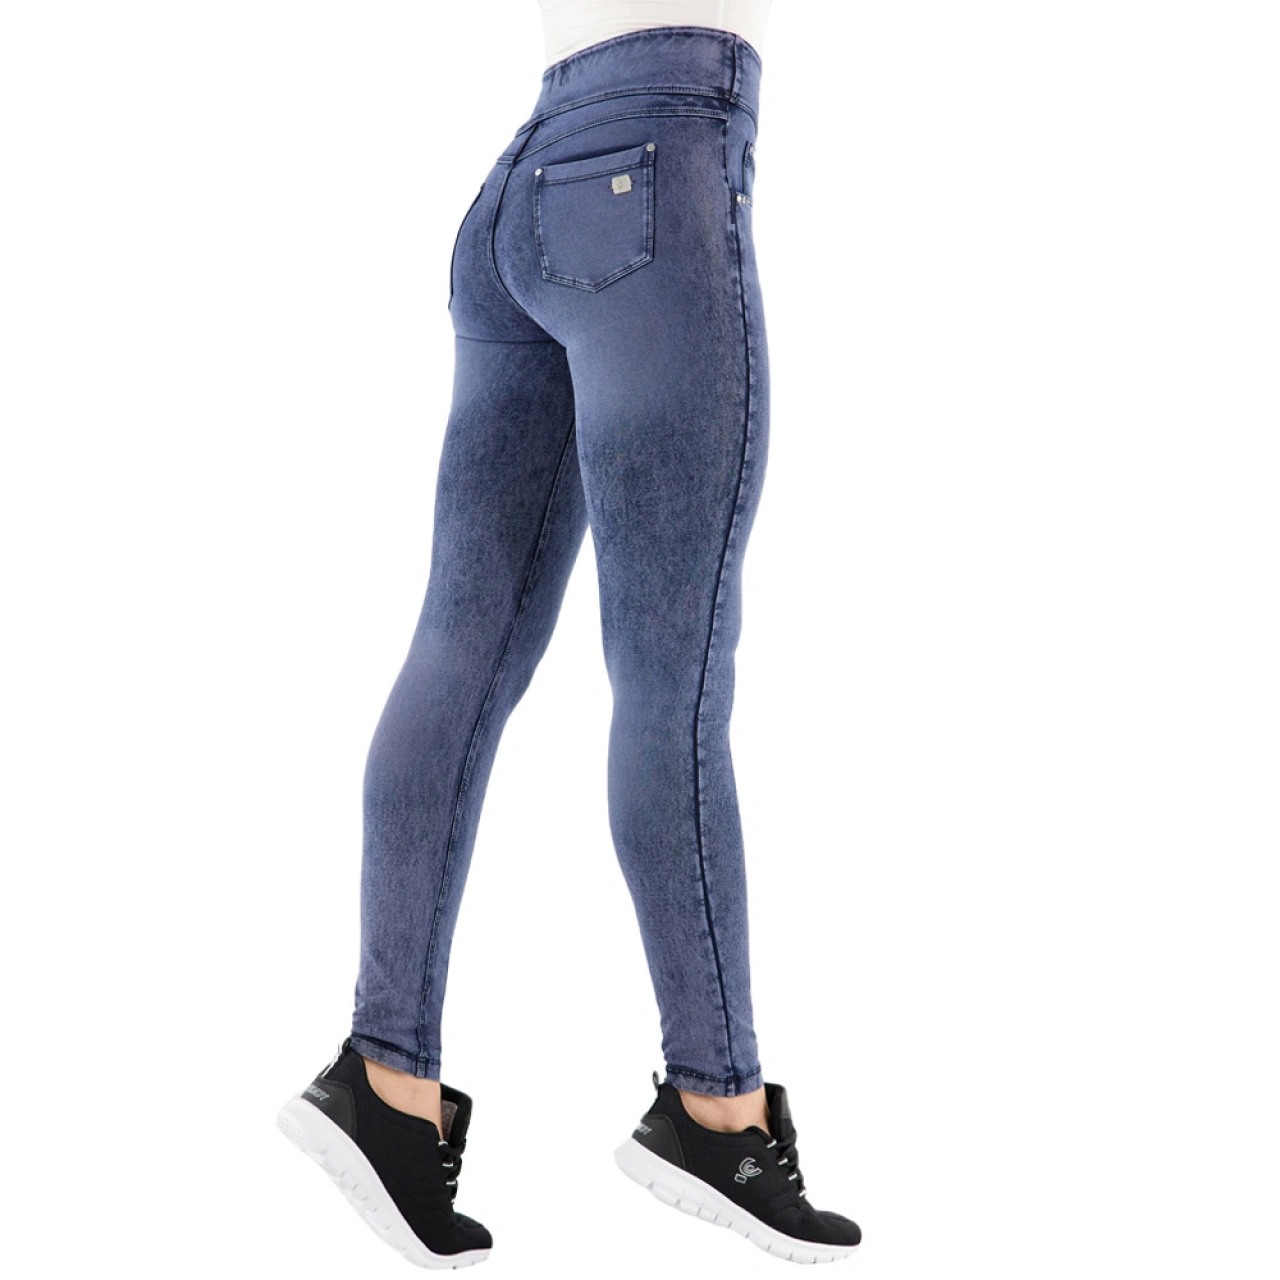 Freddy N.O.W.® Pants Yoga trousers in colourful denim-effect fabric -  NOWY1MS101-J53B - Spot Team